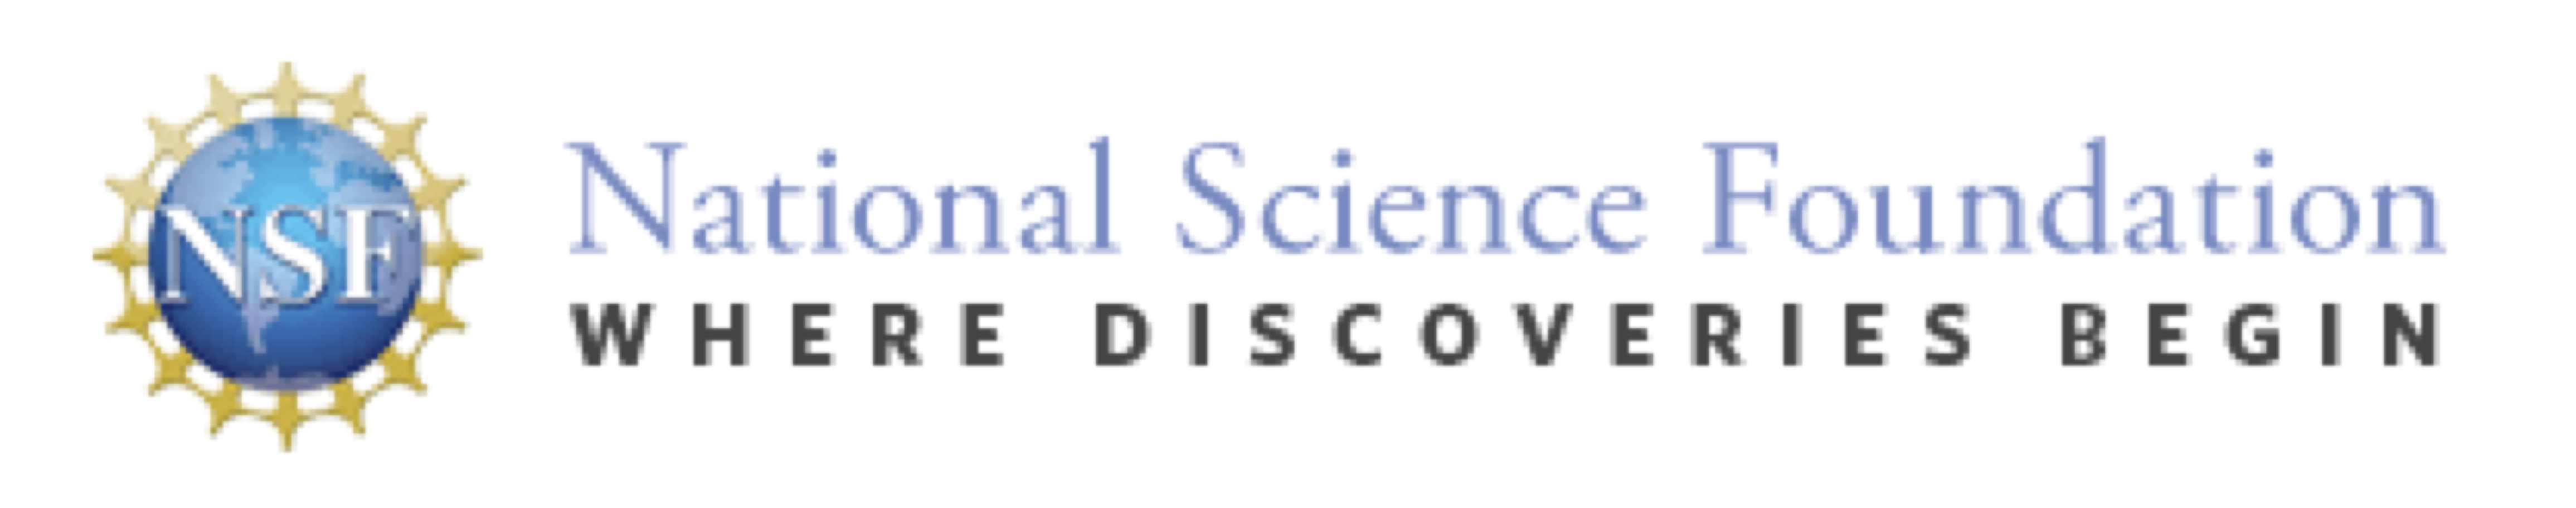 Doctoral dissertation improvement grant national science foundation